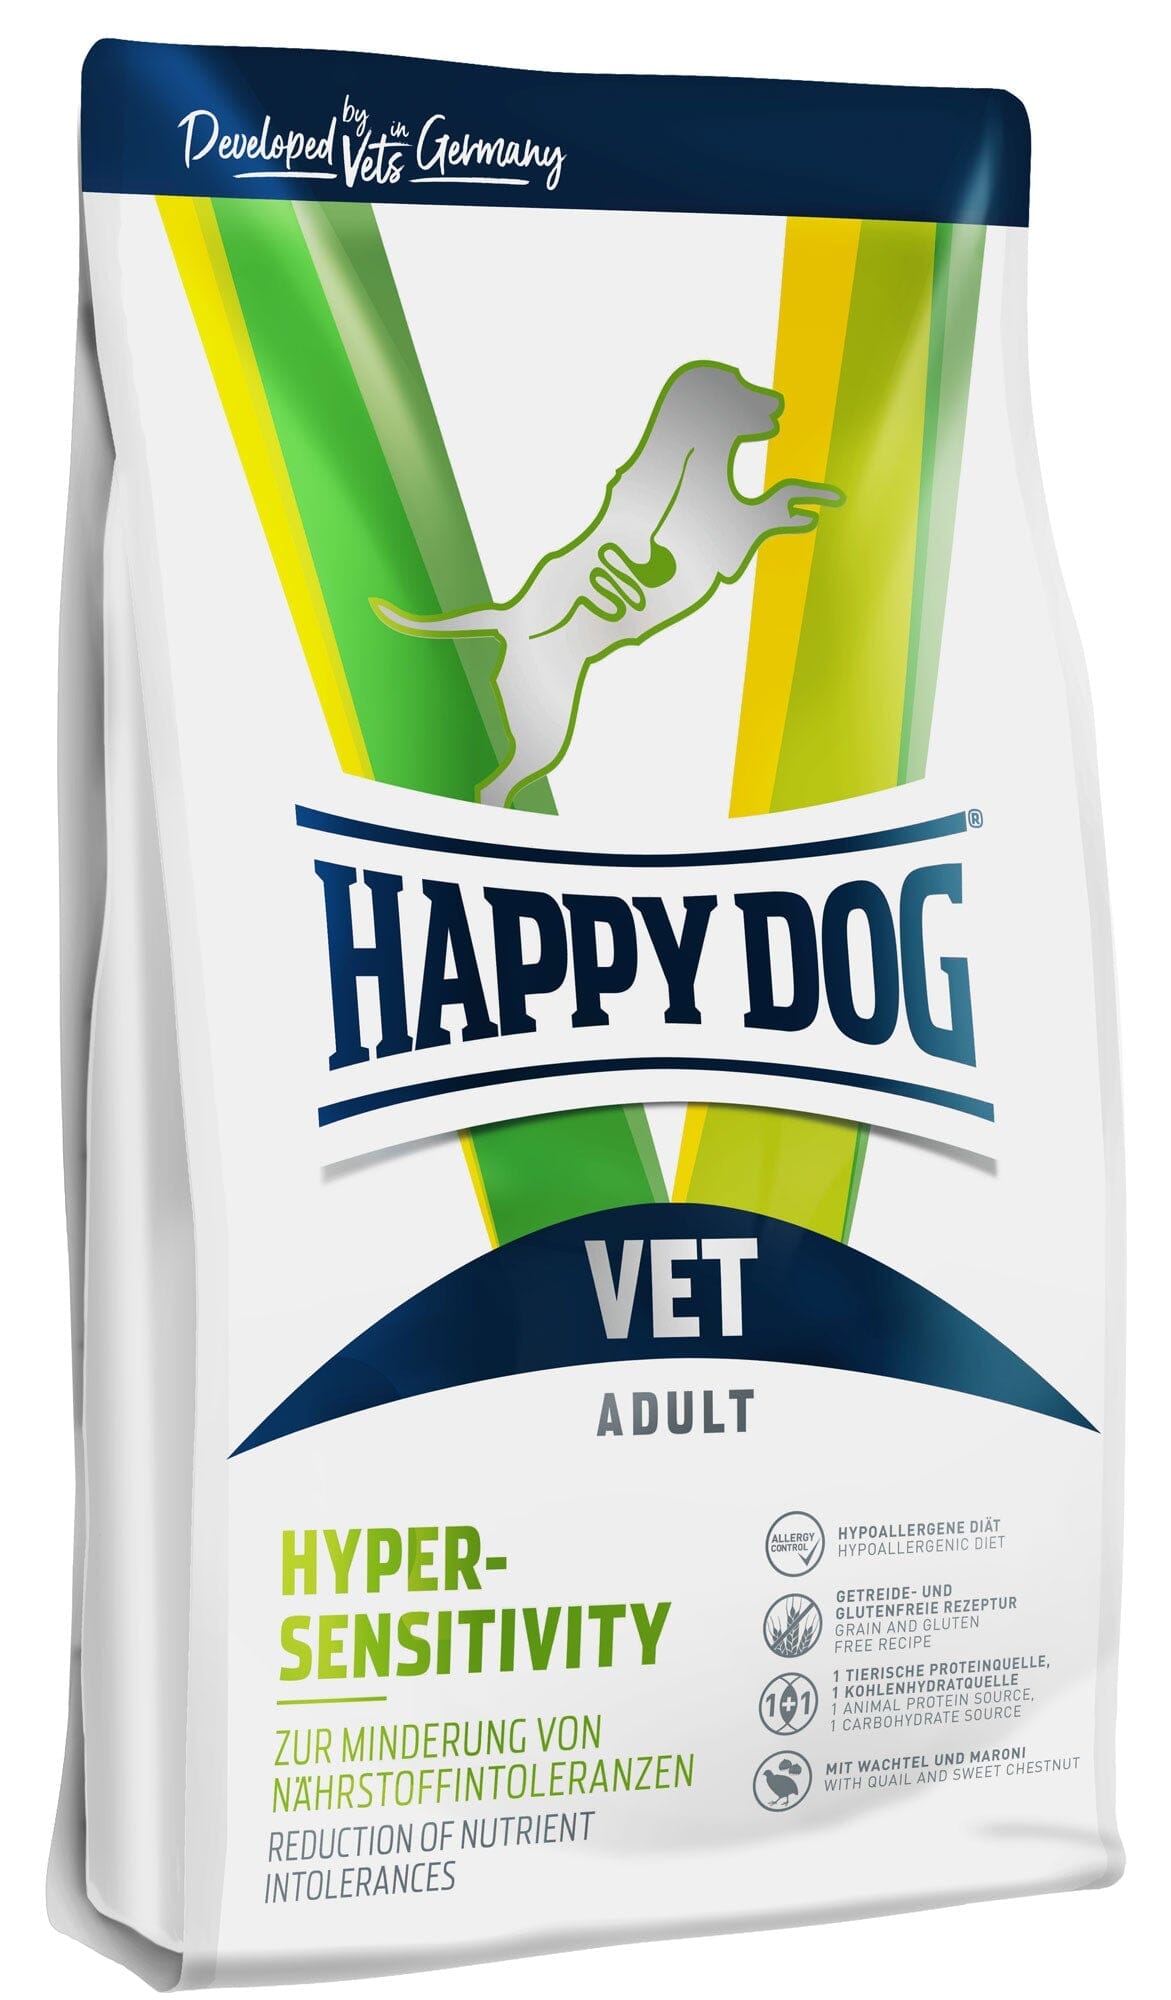 Hypersensitive dog food